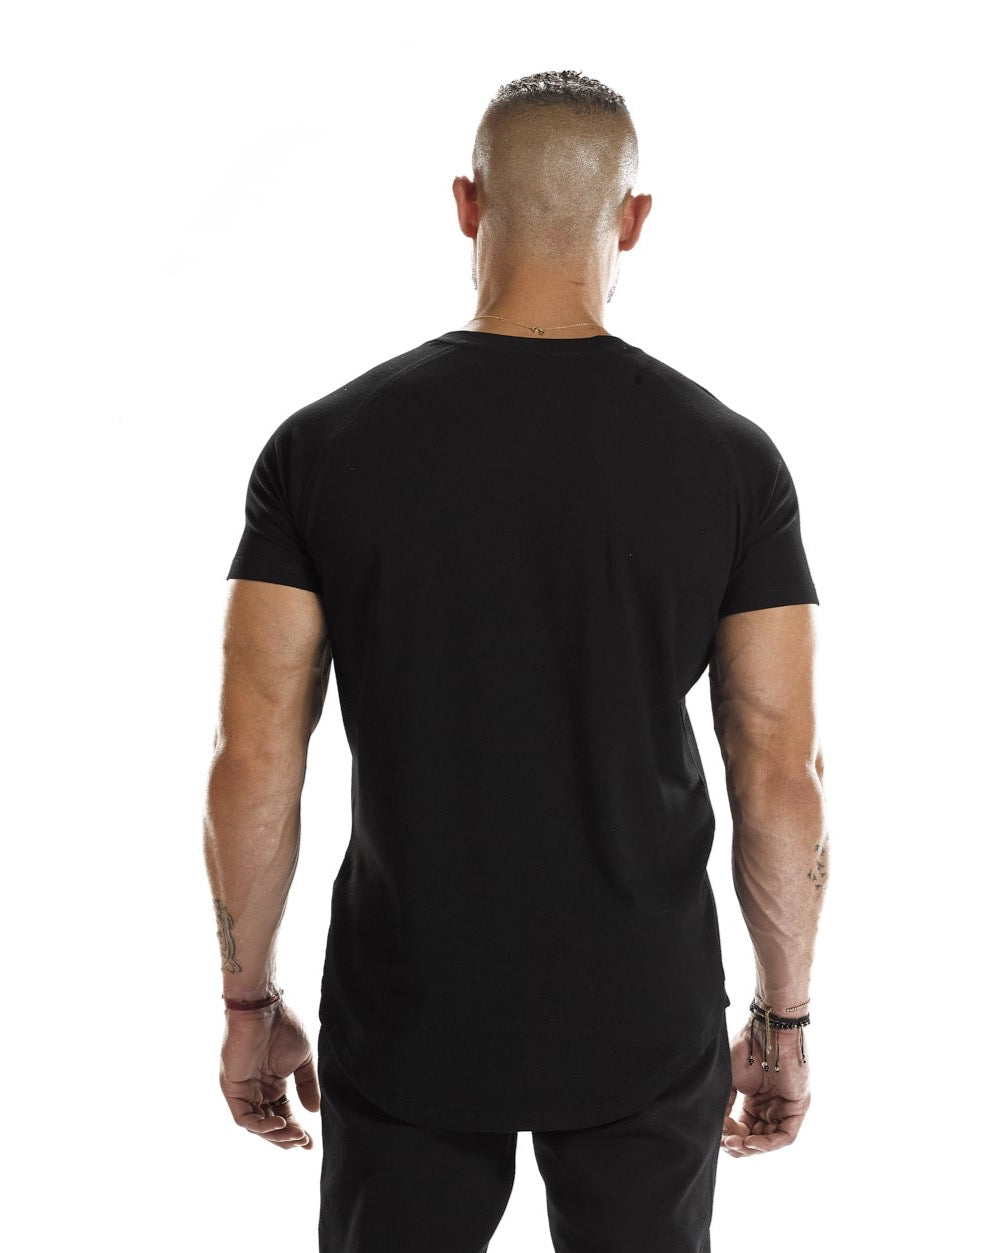 Bar-Basic Raglan T-shirt [Cotton] - T-Shirt - Gym Apparel Egypt